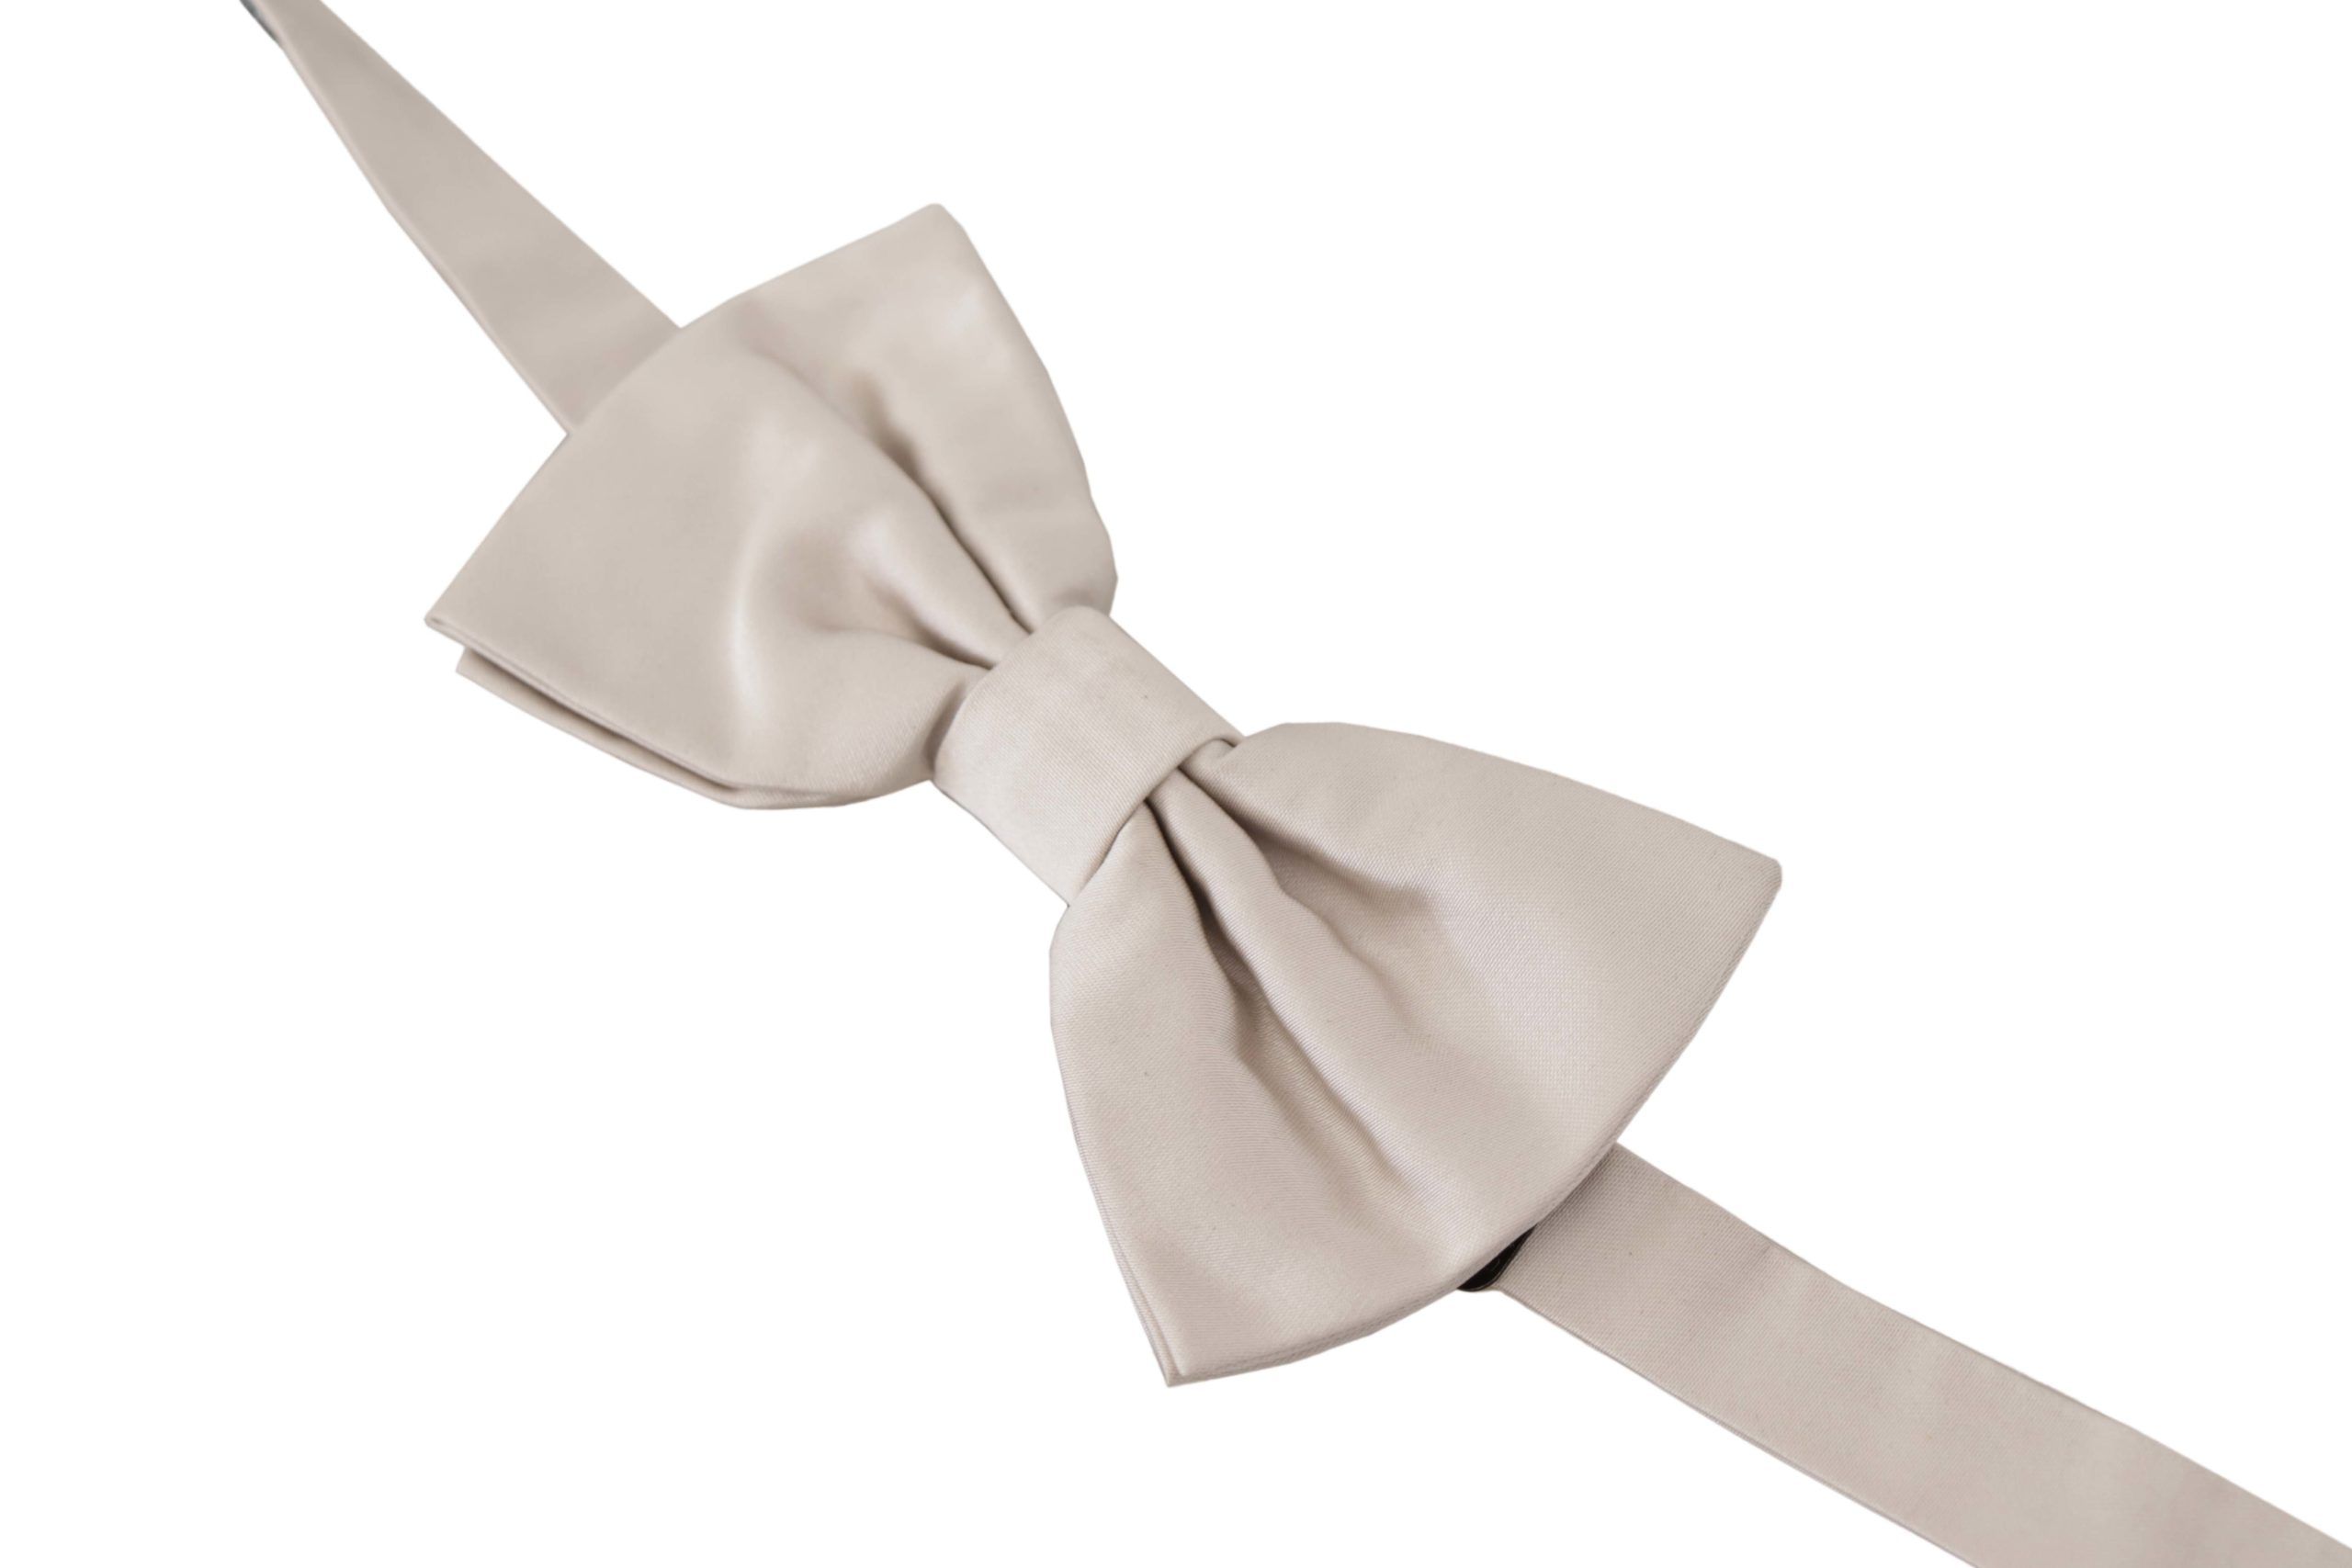 Exquisite Silk Gray Bow Tie